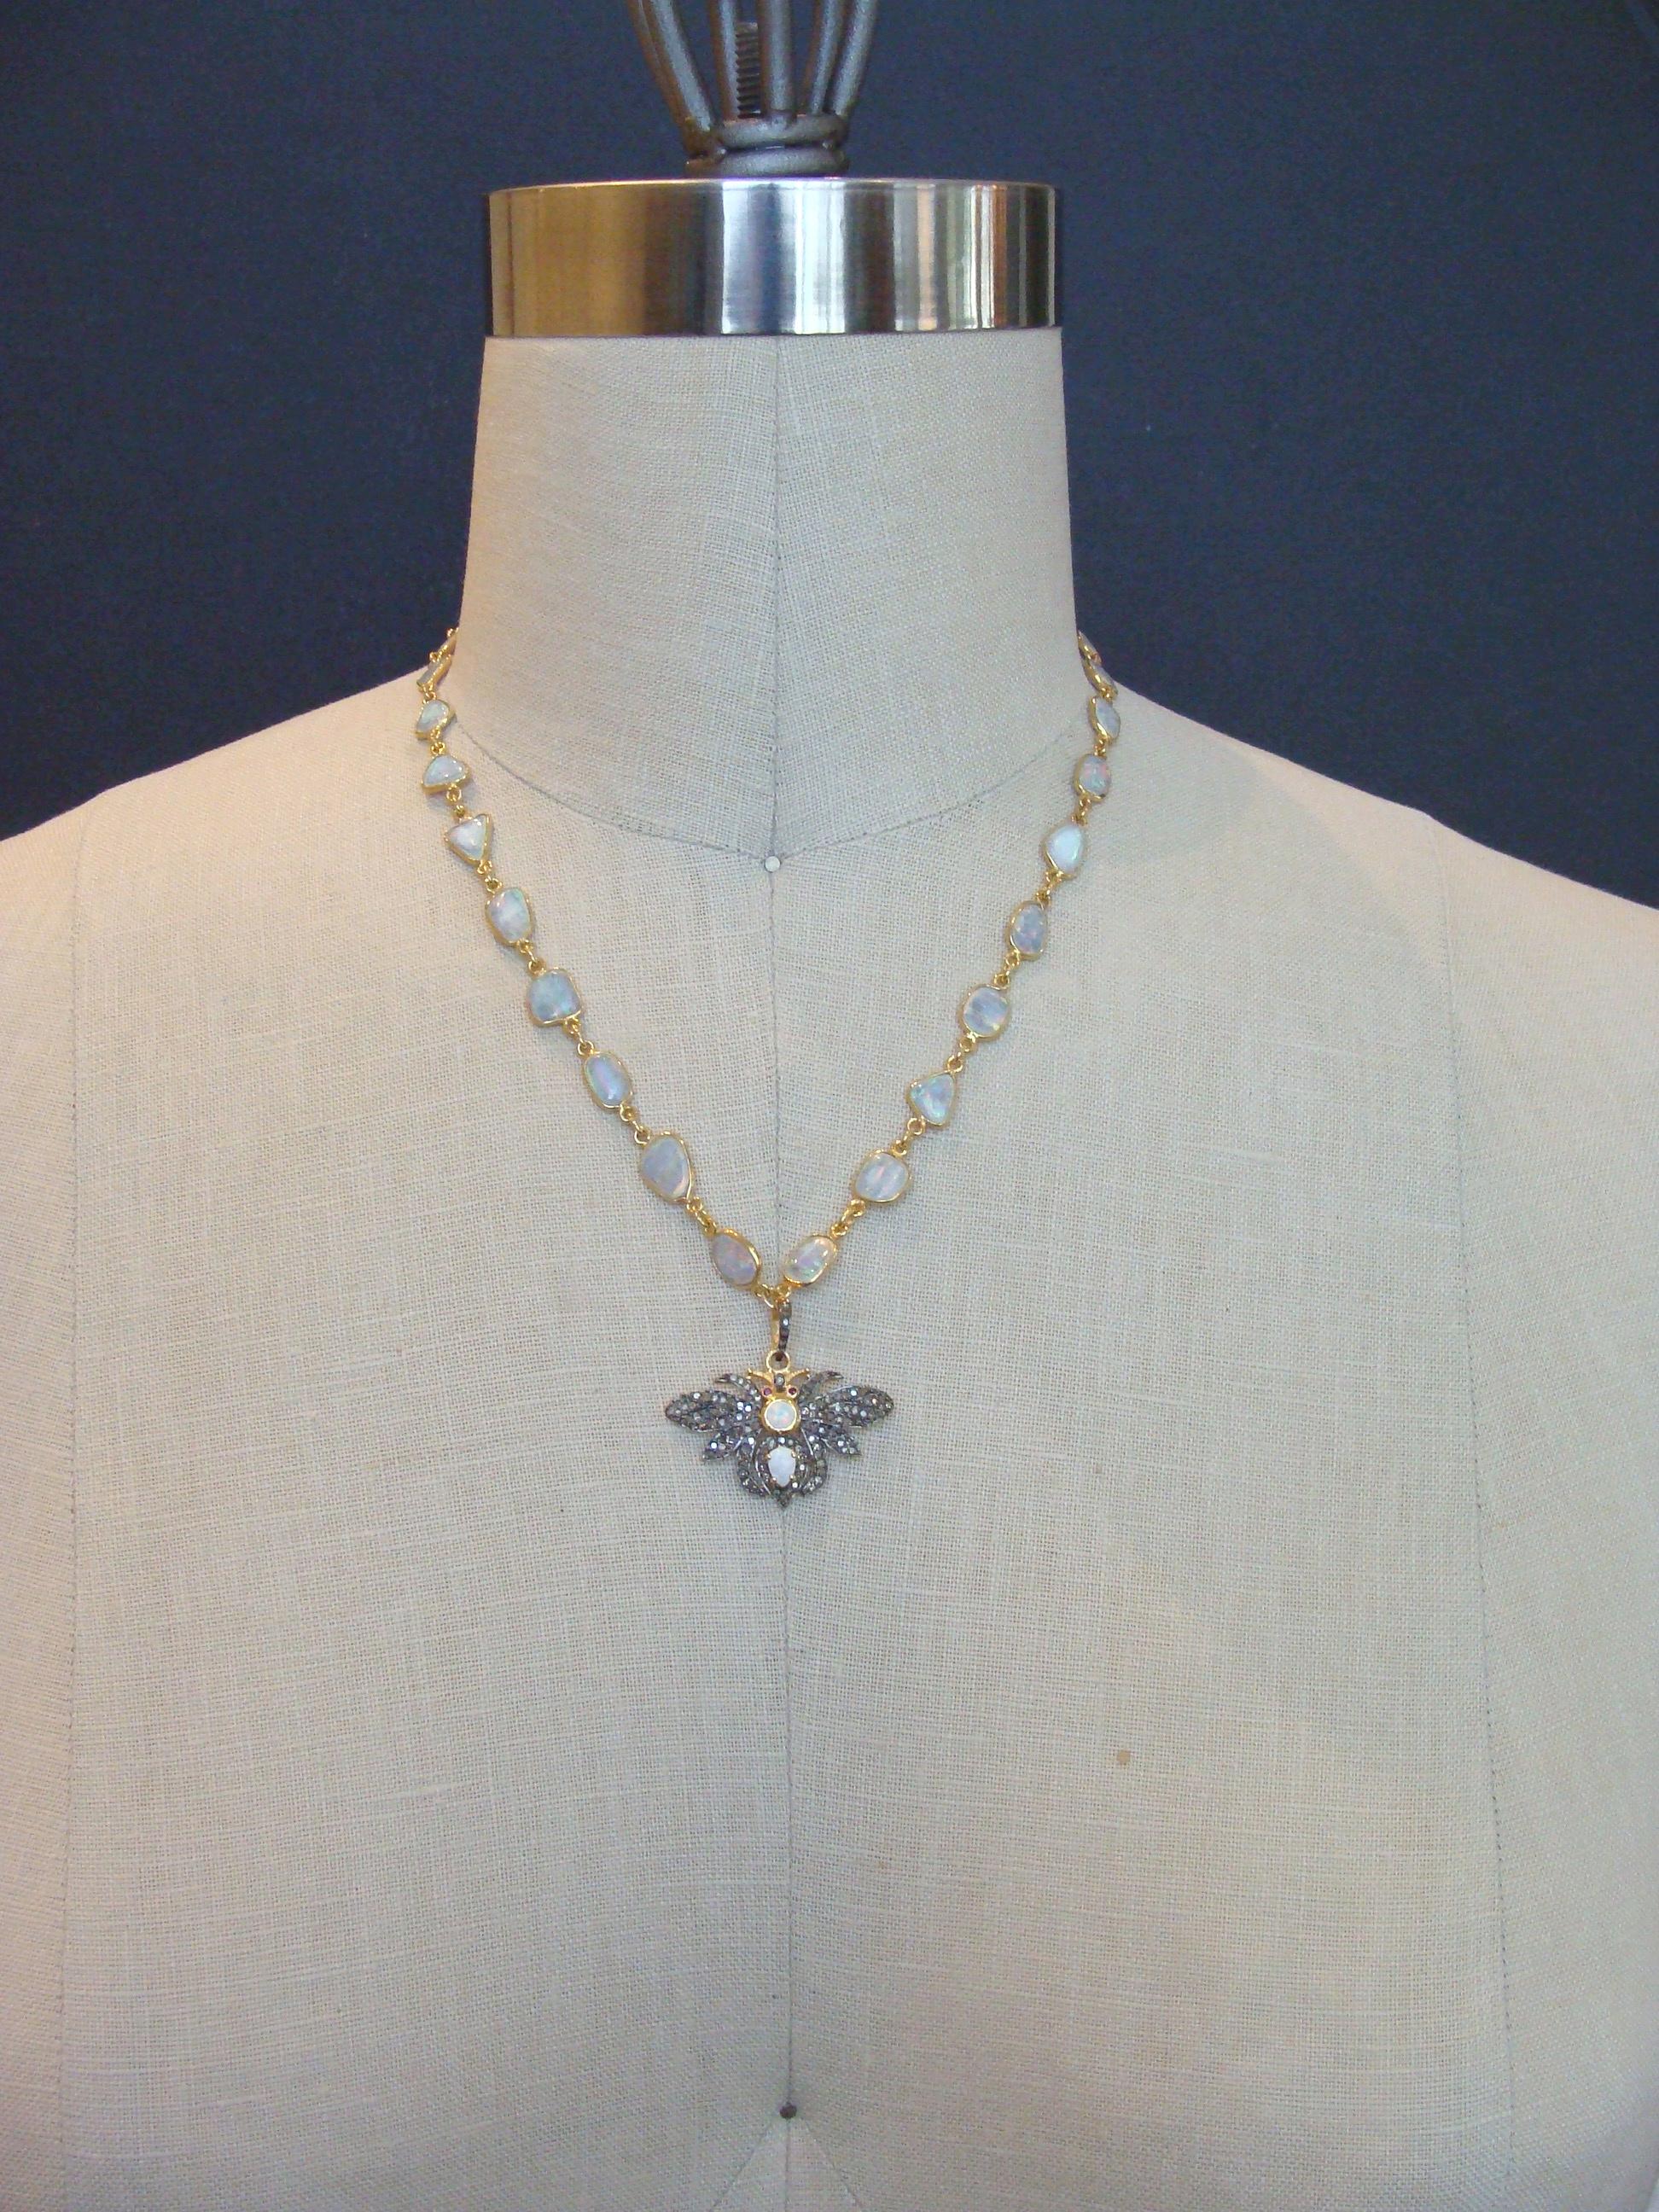 Bezel Set Opal Slices Necklace with Diamond/Opal/Ruby Bee Pedant, Devora Neckla 2